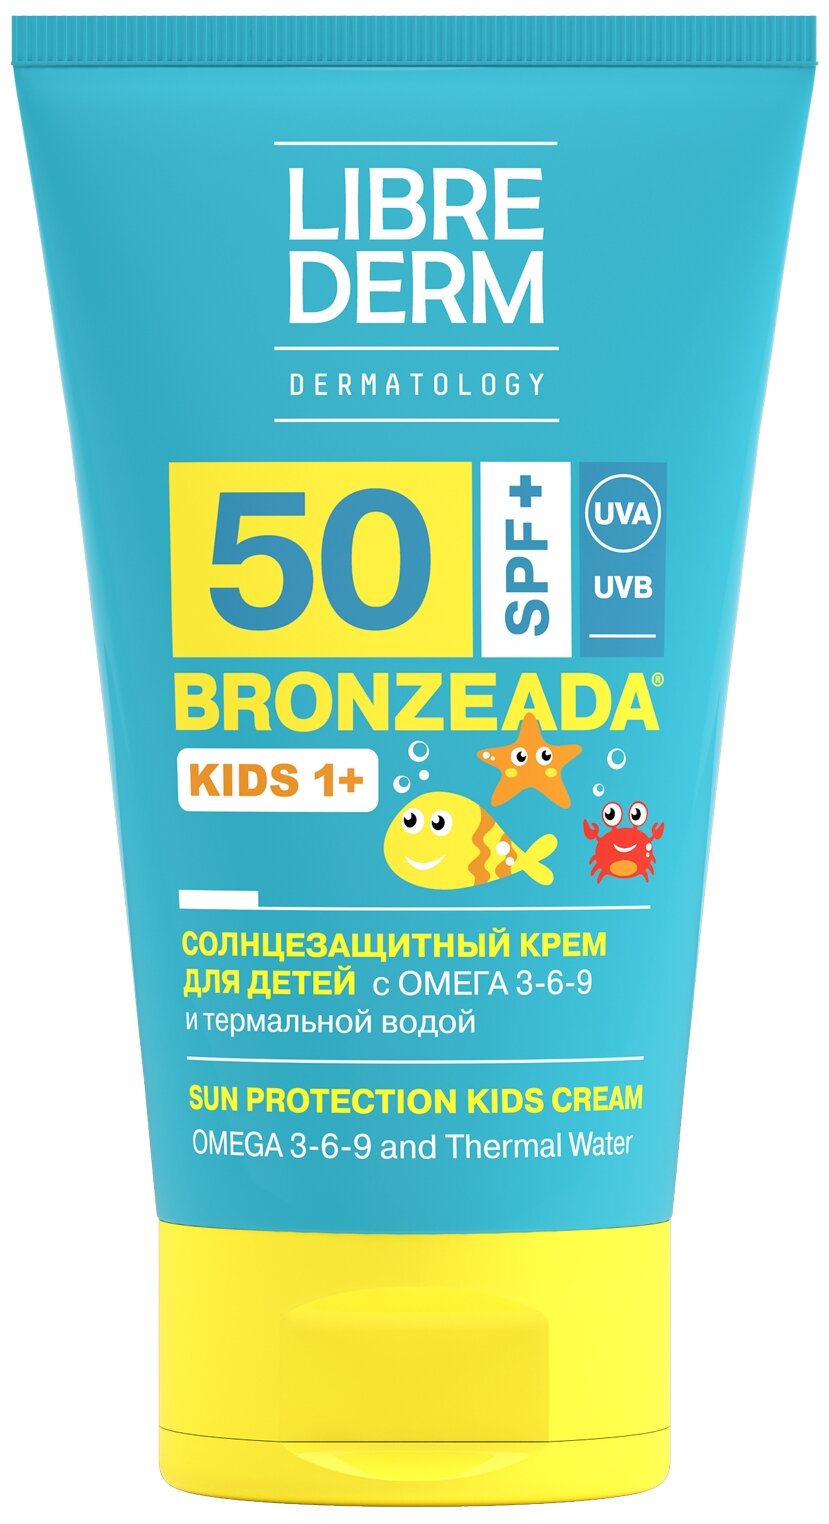 Librederm Bronzeada солнцезащитный крем для детей Omega 3-6-9 SPF 50